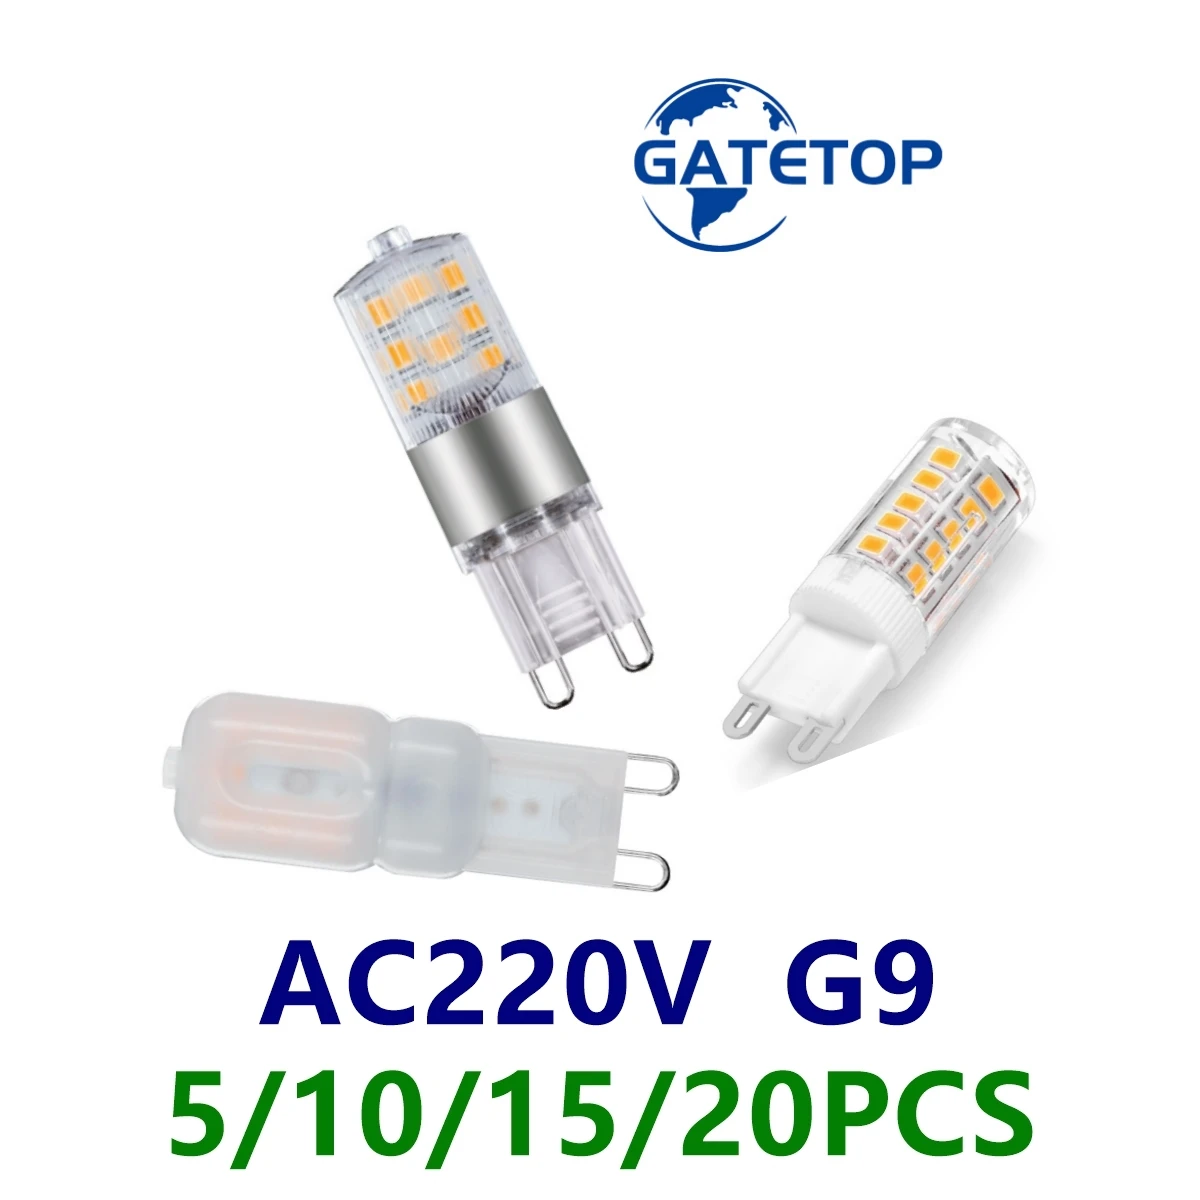 

5-20pcs LED Mini G9 Corn Light AC220V 3W super bright non-strobe warm white light can replace 20W 50W halogen lamp